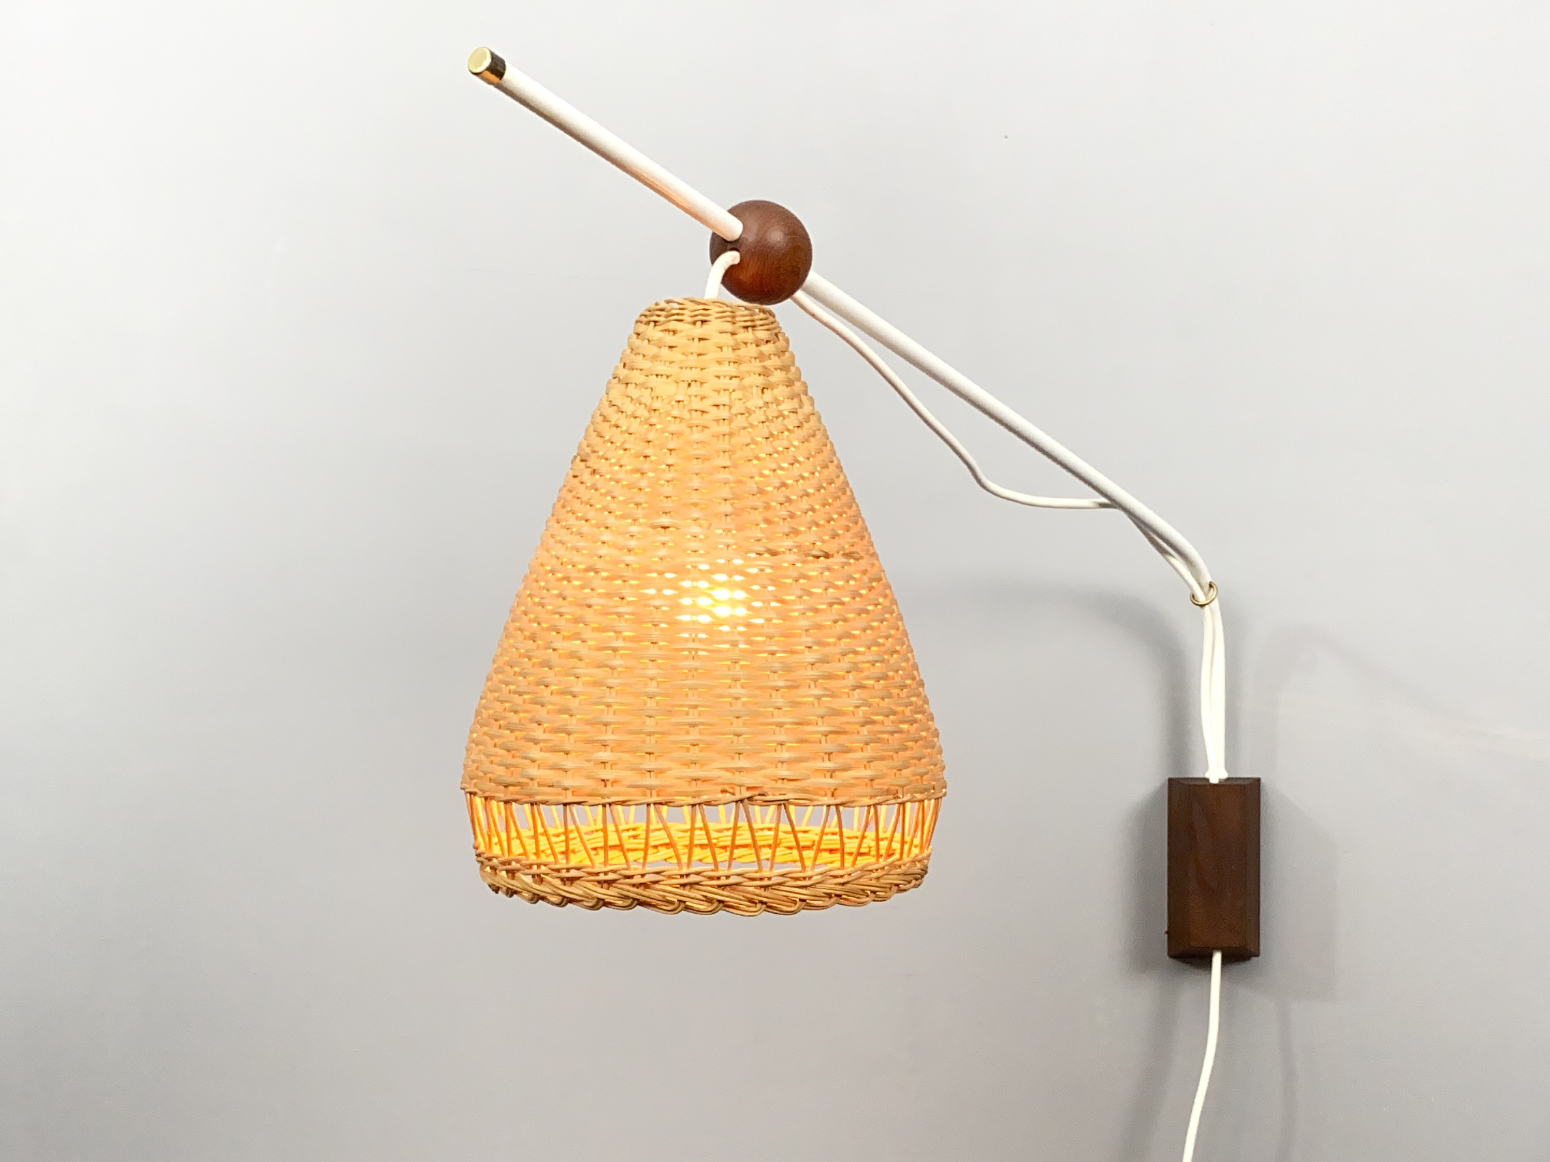 Wandlampe mit schwenkbarem Arm aus Teak Holz, Metall und Korbgeflecht Lampenschirm, Dänemark, 1960er